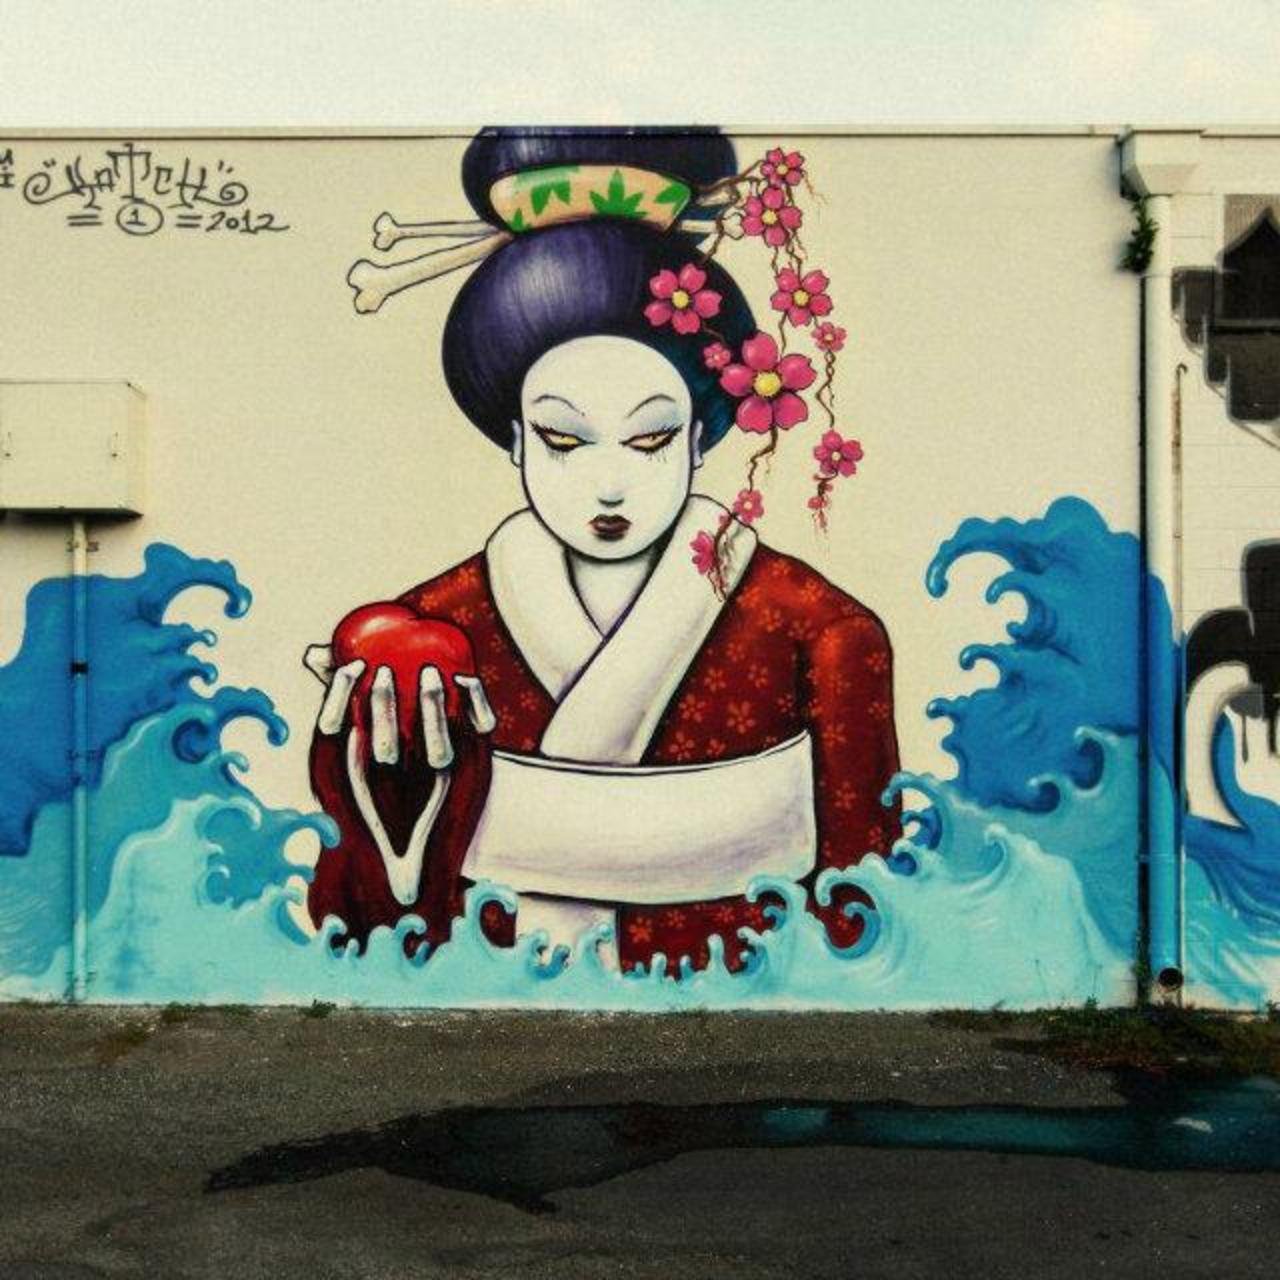 "@5putnik1: Stormy times for Geisha • #streetart #graffiti #geisha #art #funky #dope . : http://t.co/frTudqG2TD"